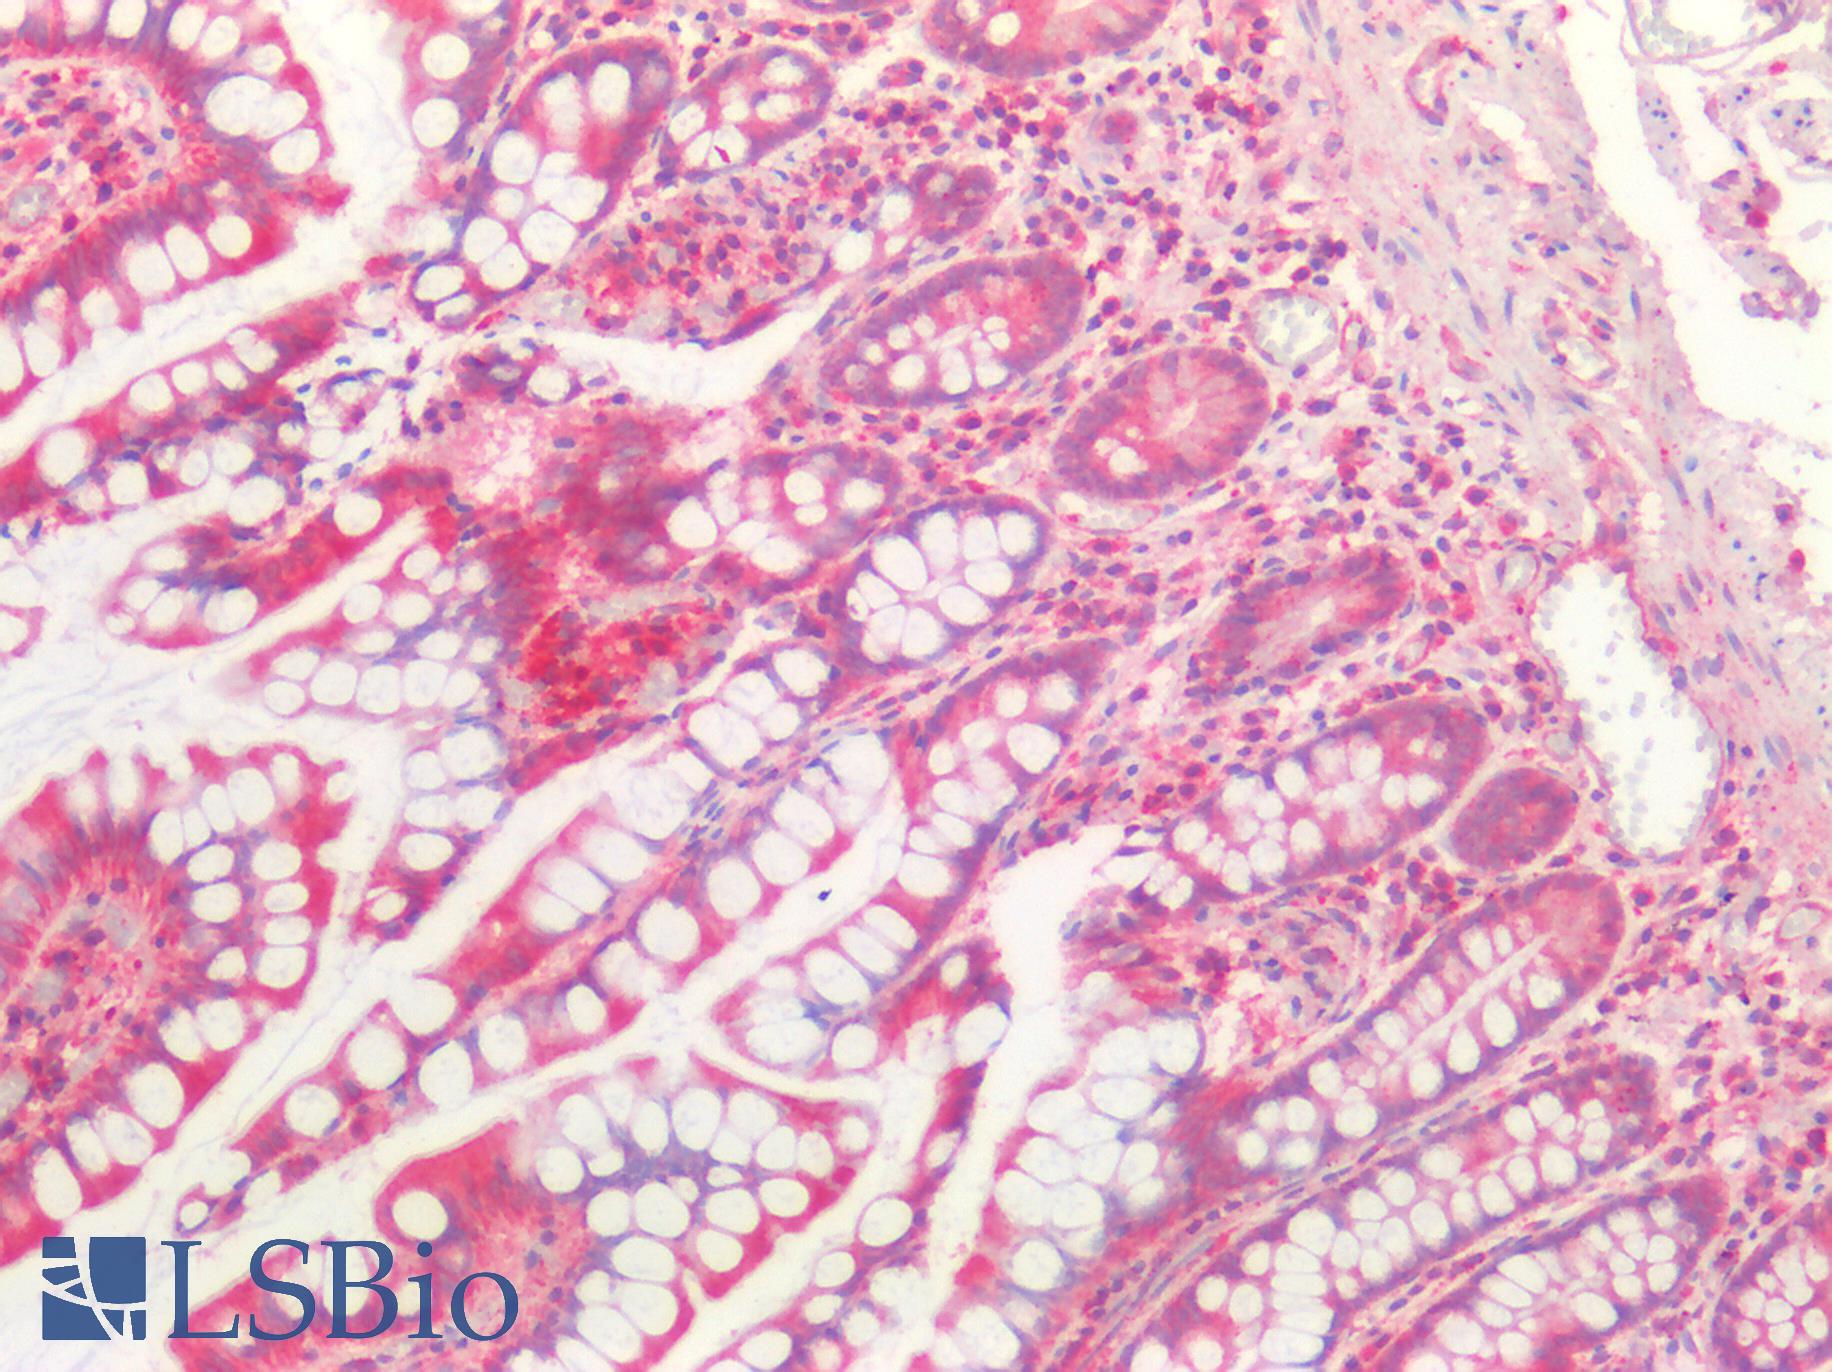 CTSB / Cathepsin B Antibody - Human Small Intestine: Formalin-Fixed, Paraffin-Embedded (FFPE)